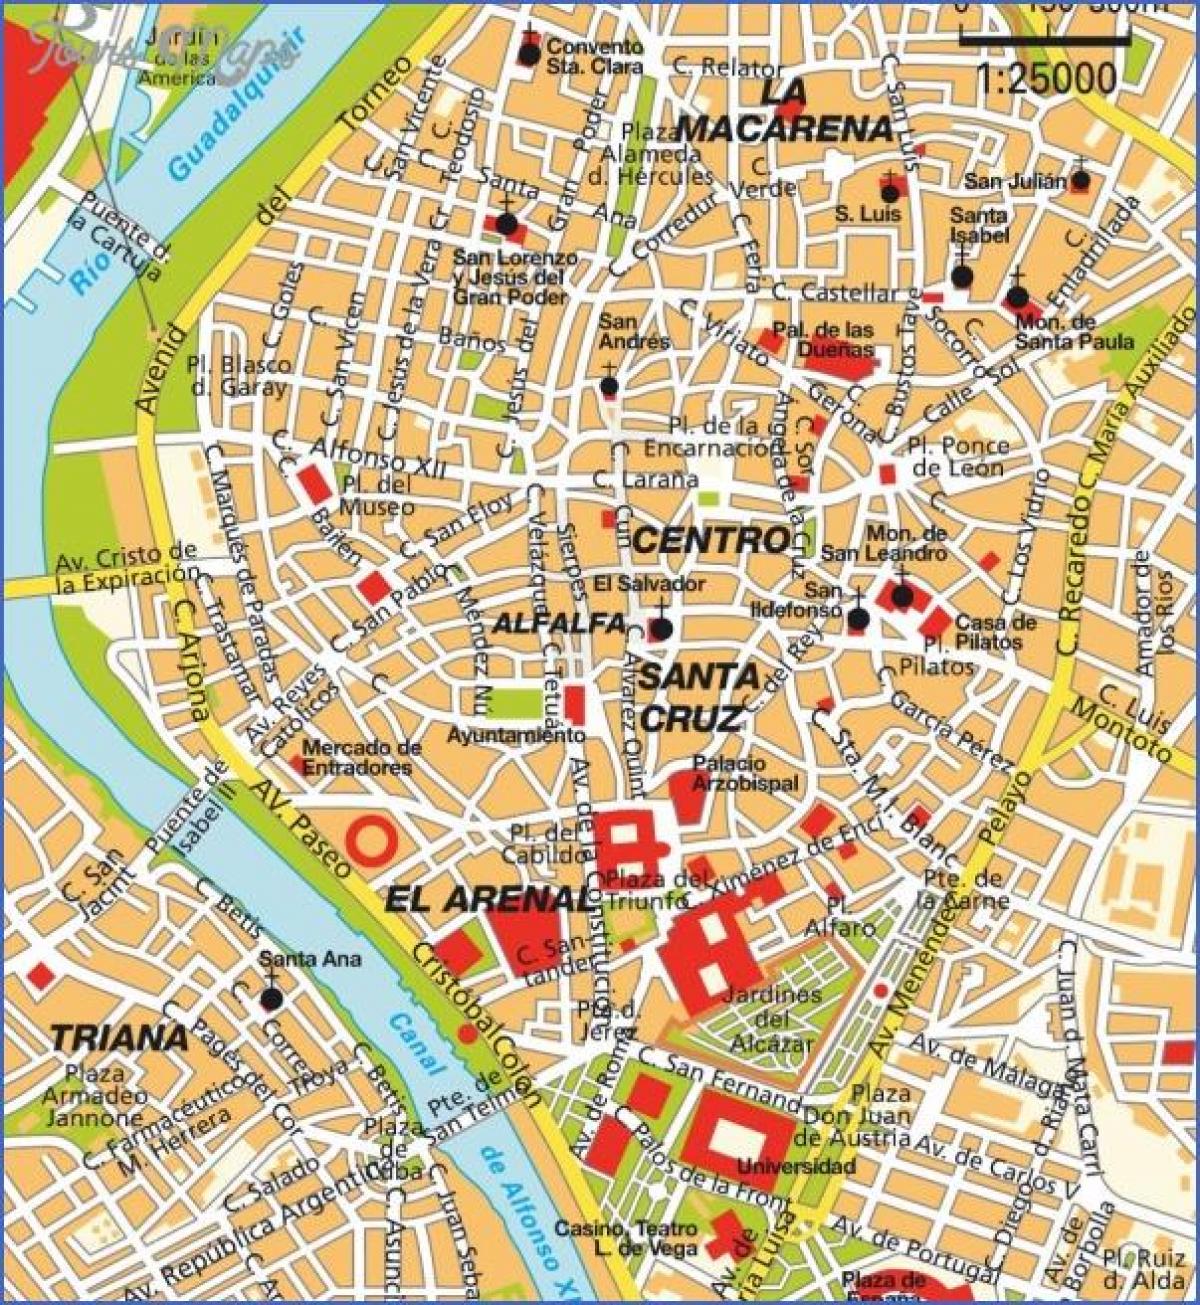 Seville sights map